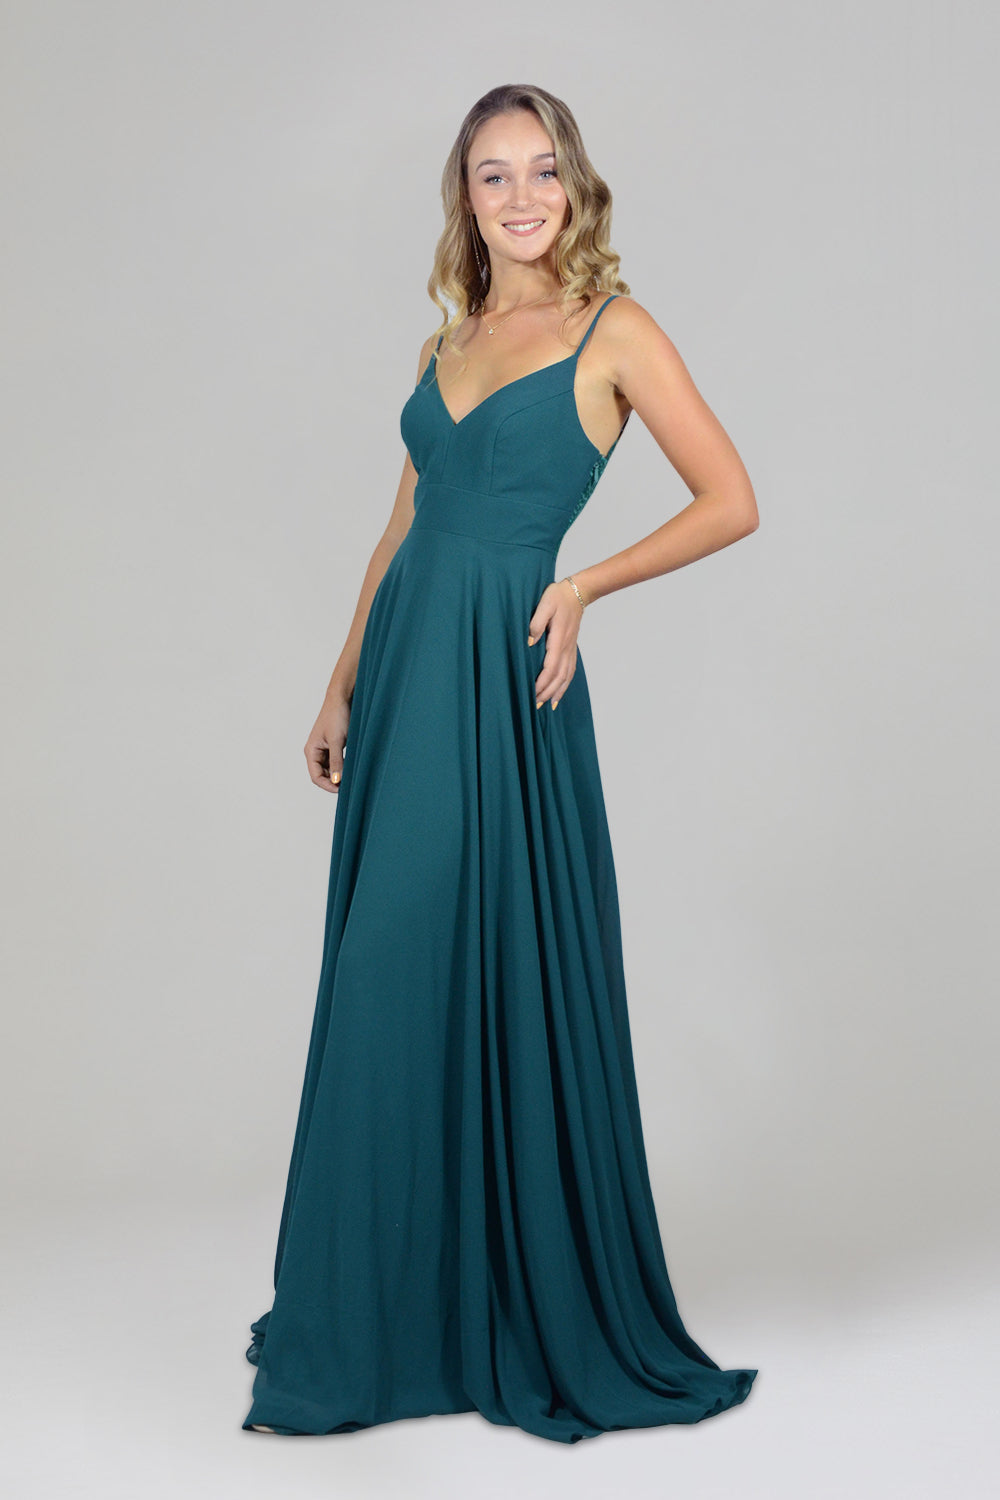 emerald bridesmaid dress custom made to order australia online envious bridal & formal